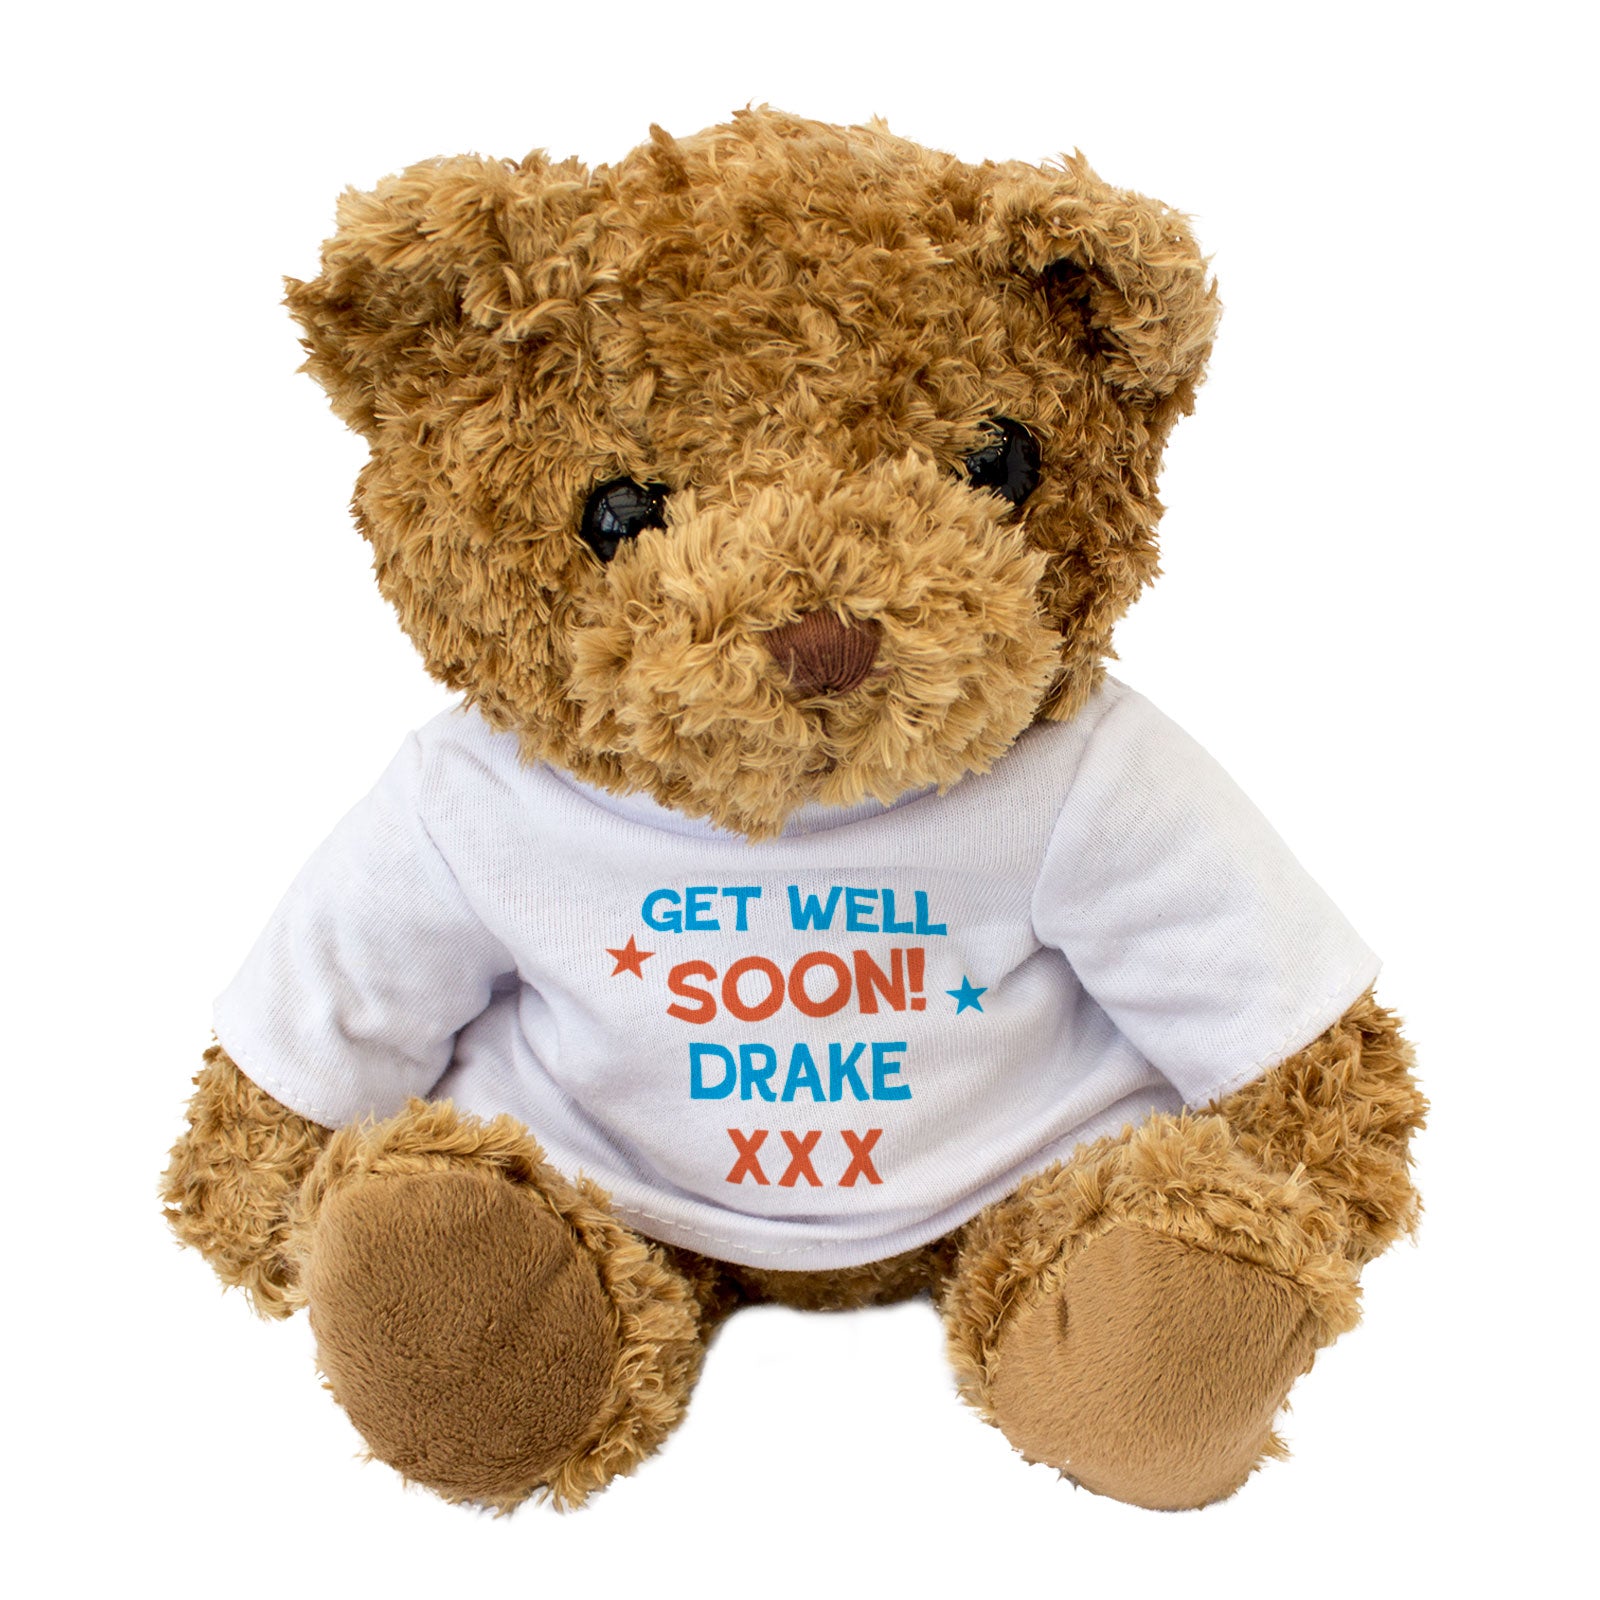 Get Well Soon Drake - Teddy Bear